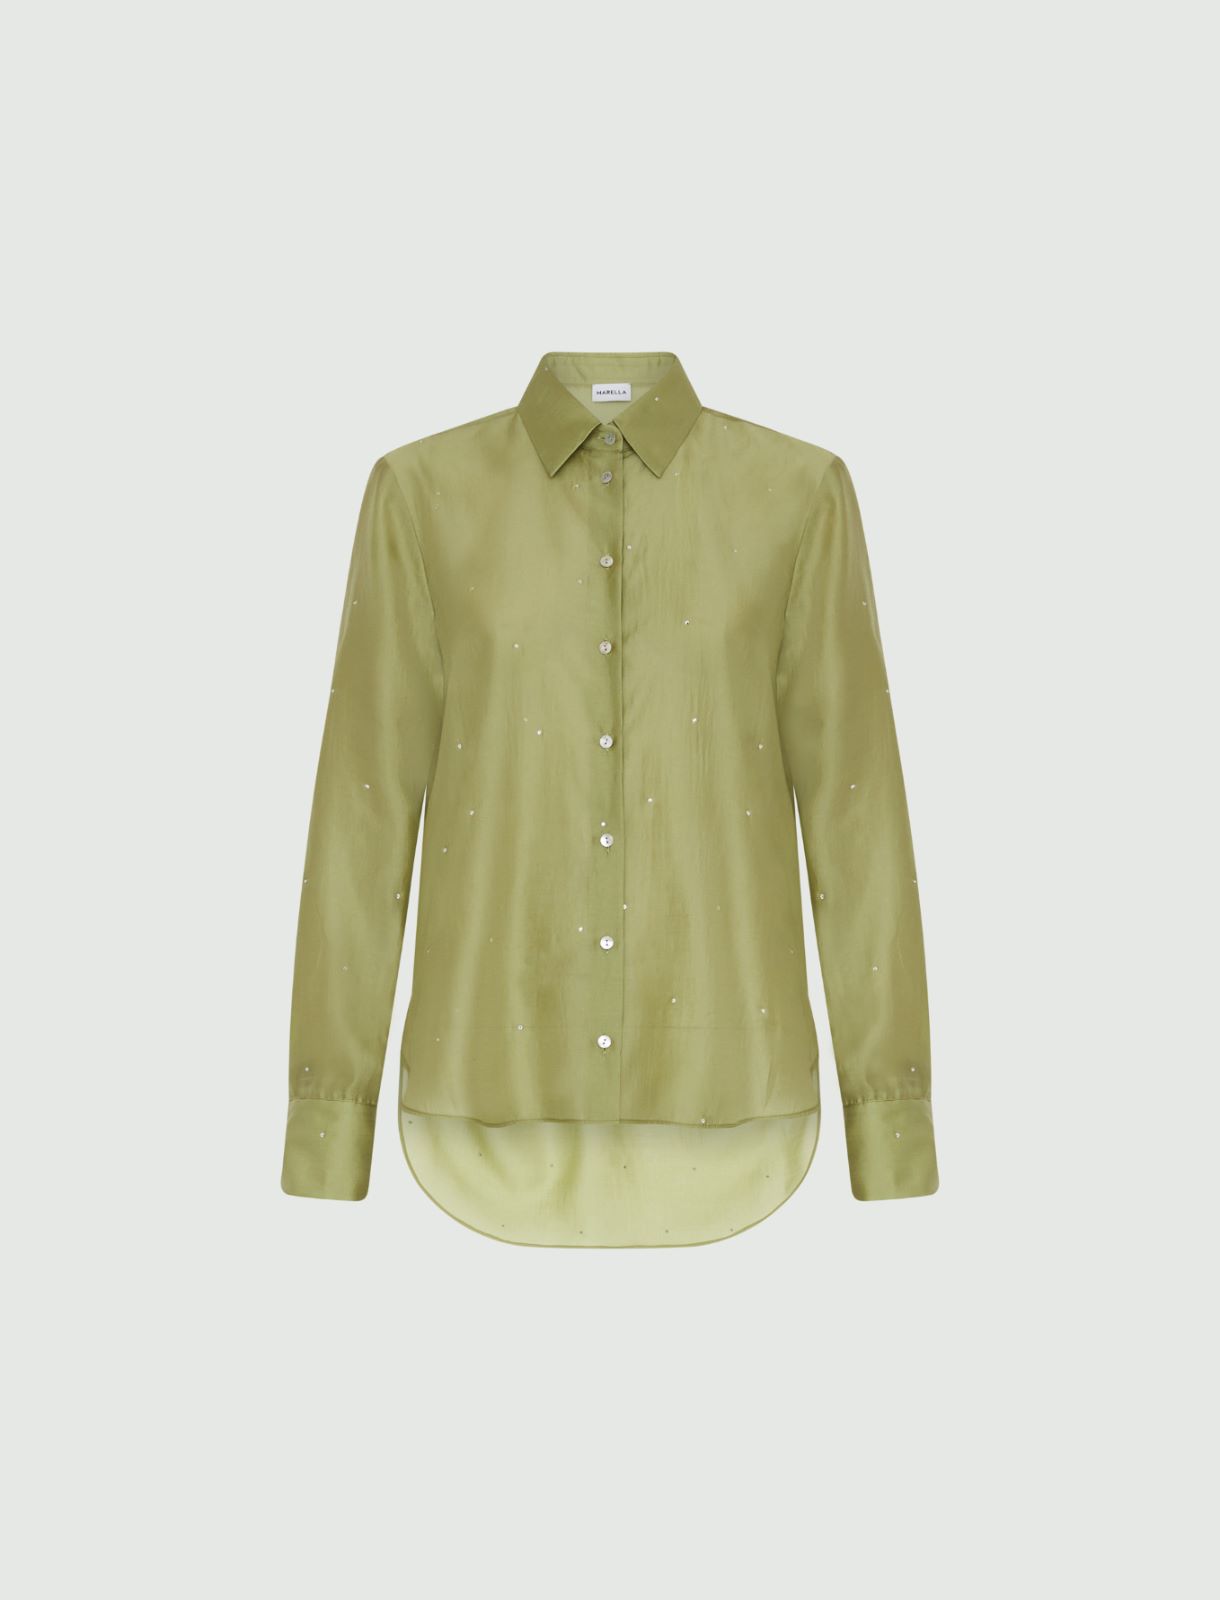 Rhinestone shirt - Avocado - Marella